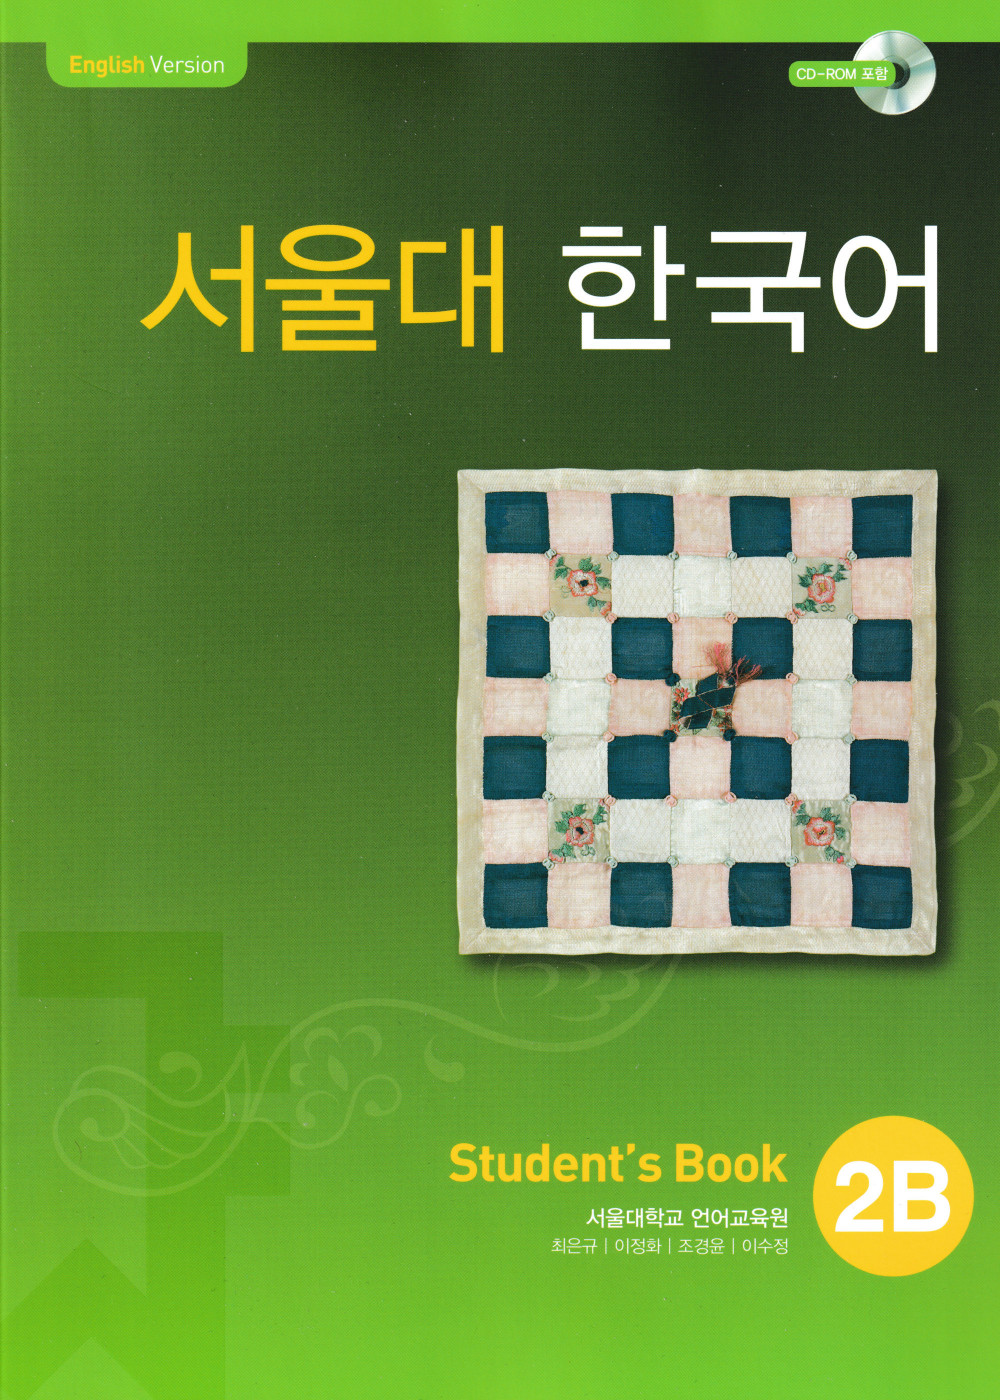 SNU Korean Student Book 2B - Seoul Hangugeo